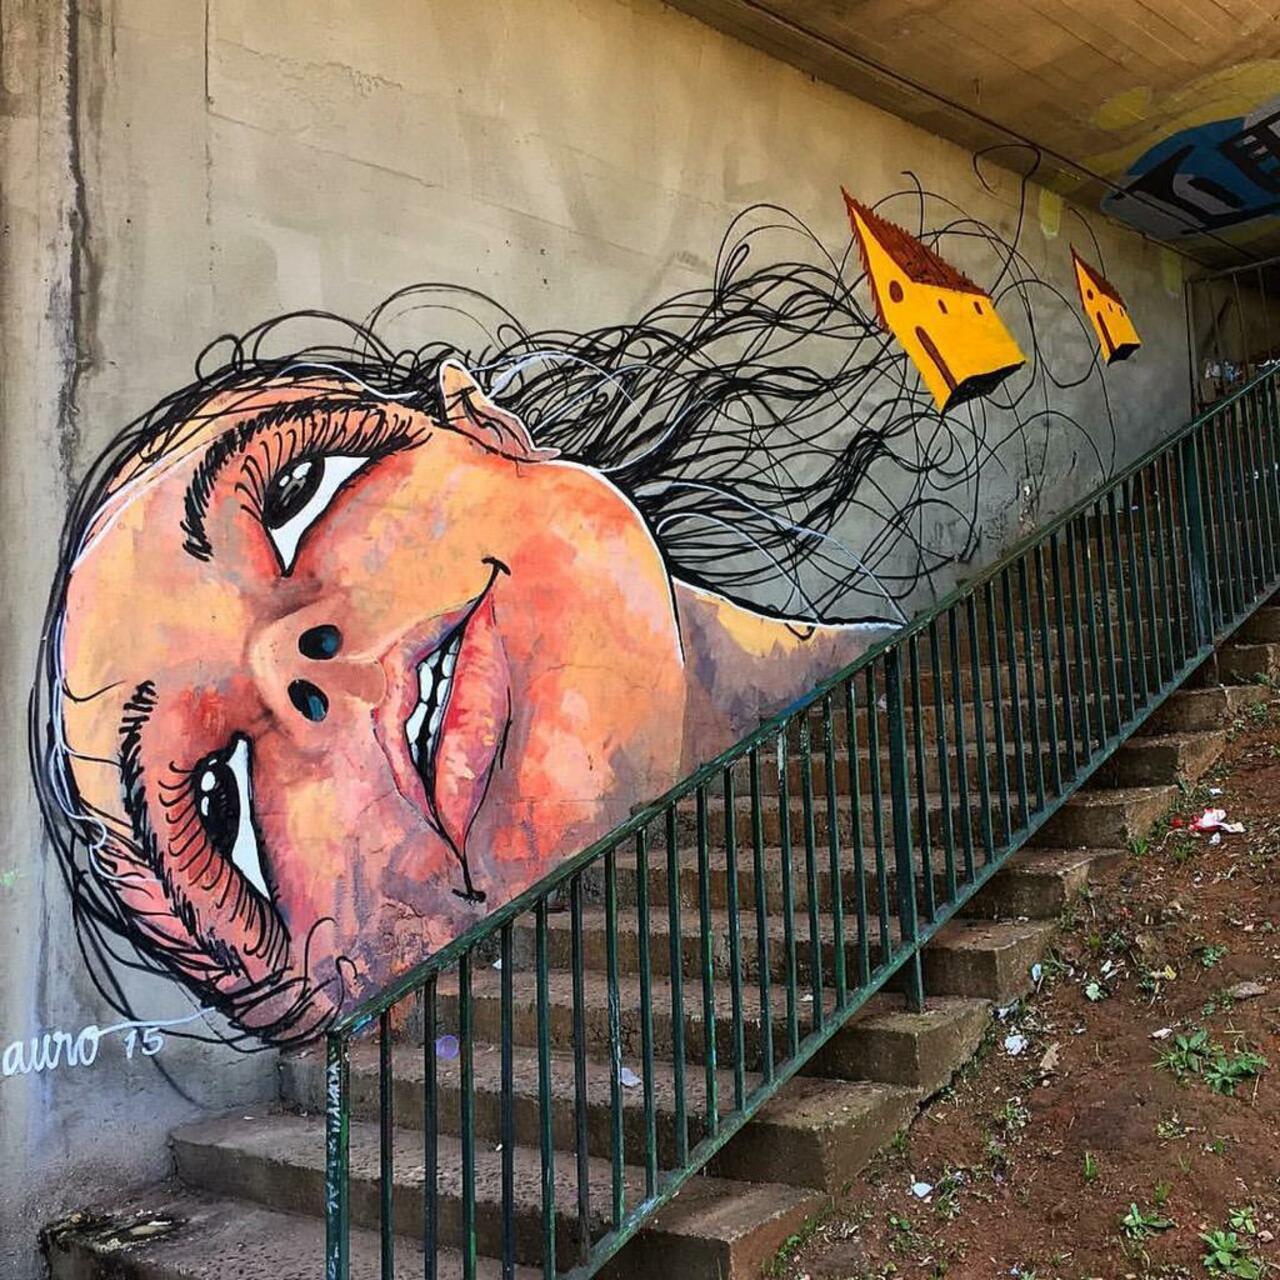 Street Art by Reveracidade in São Paulo 

#art #graffiti #mural #streetart http://t.co/13woCWKA8a